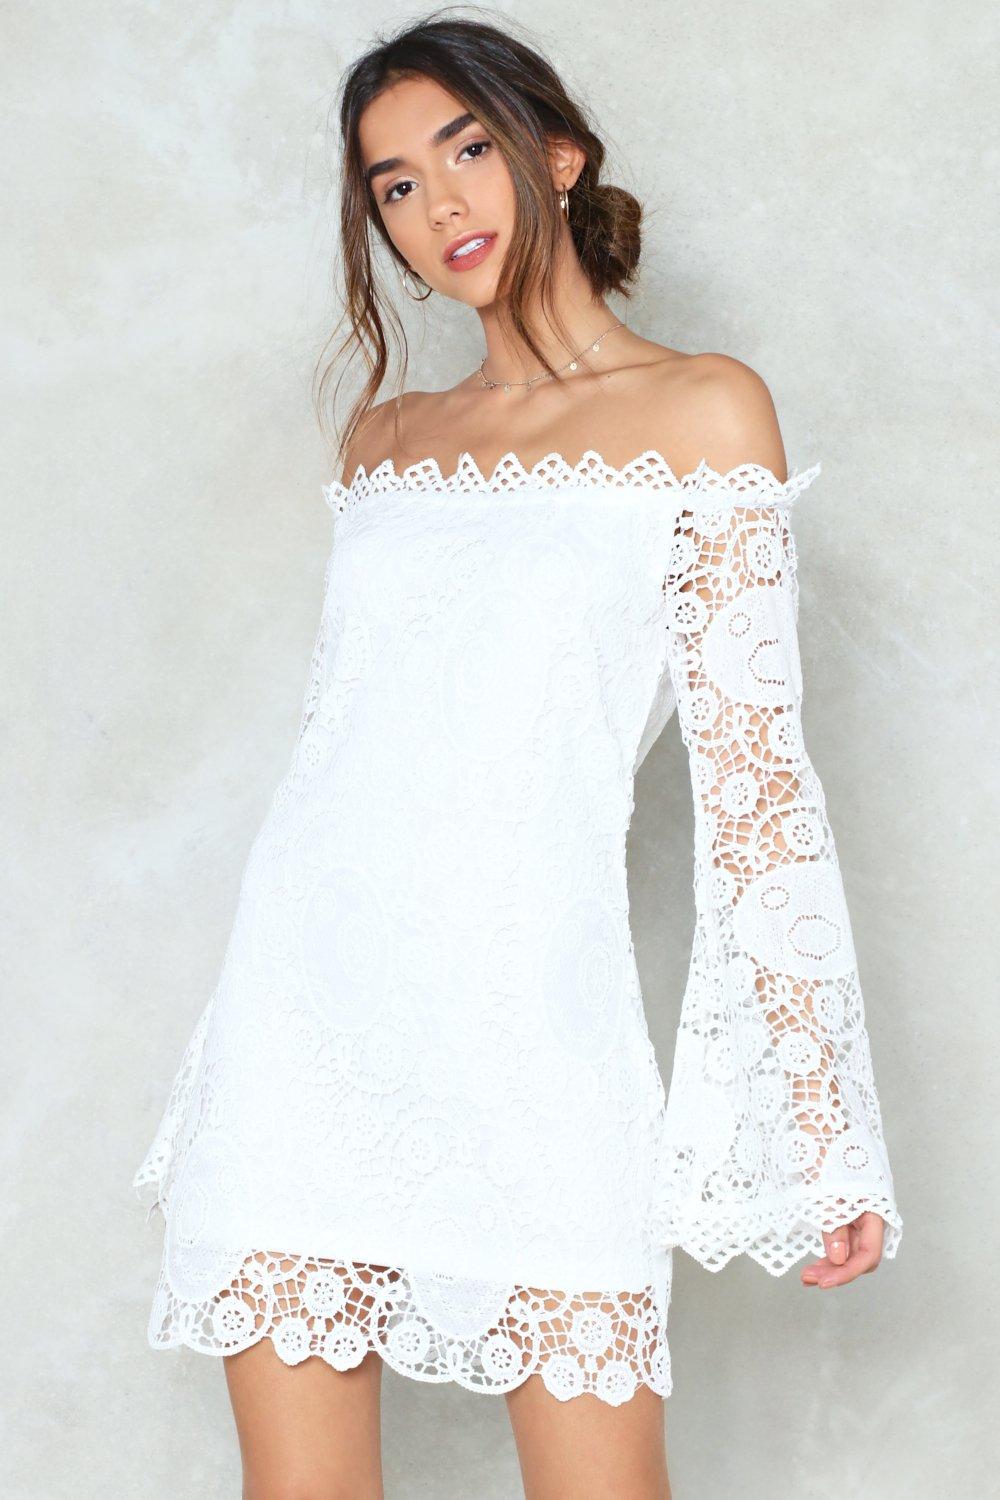 white over the shoulder dress